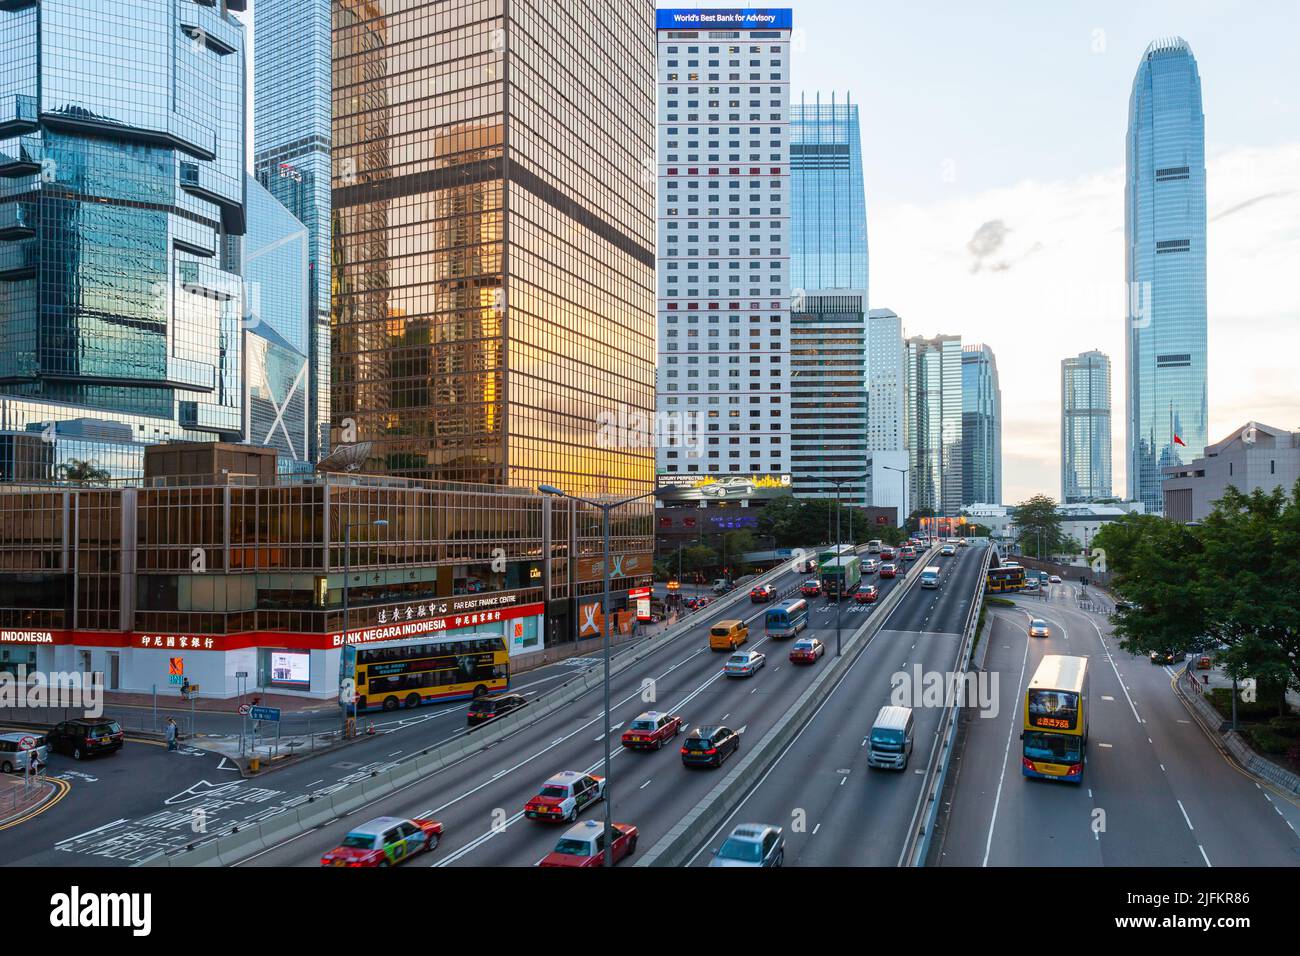 Hong Kong - July 11, 2017: Street view of Hong Kong city. Connaught Rd Central perspective Stock Photo